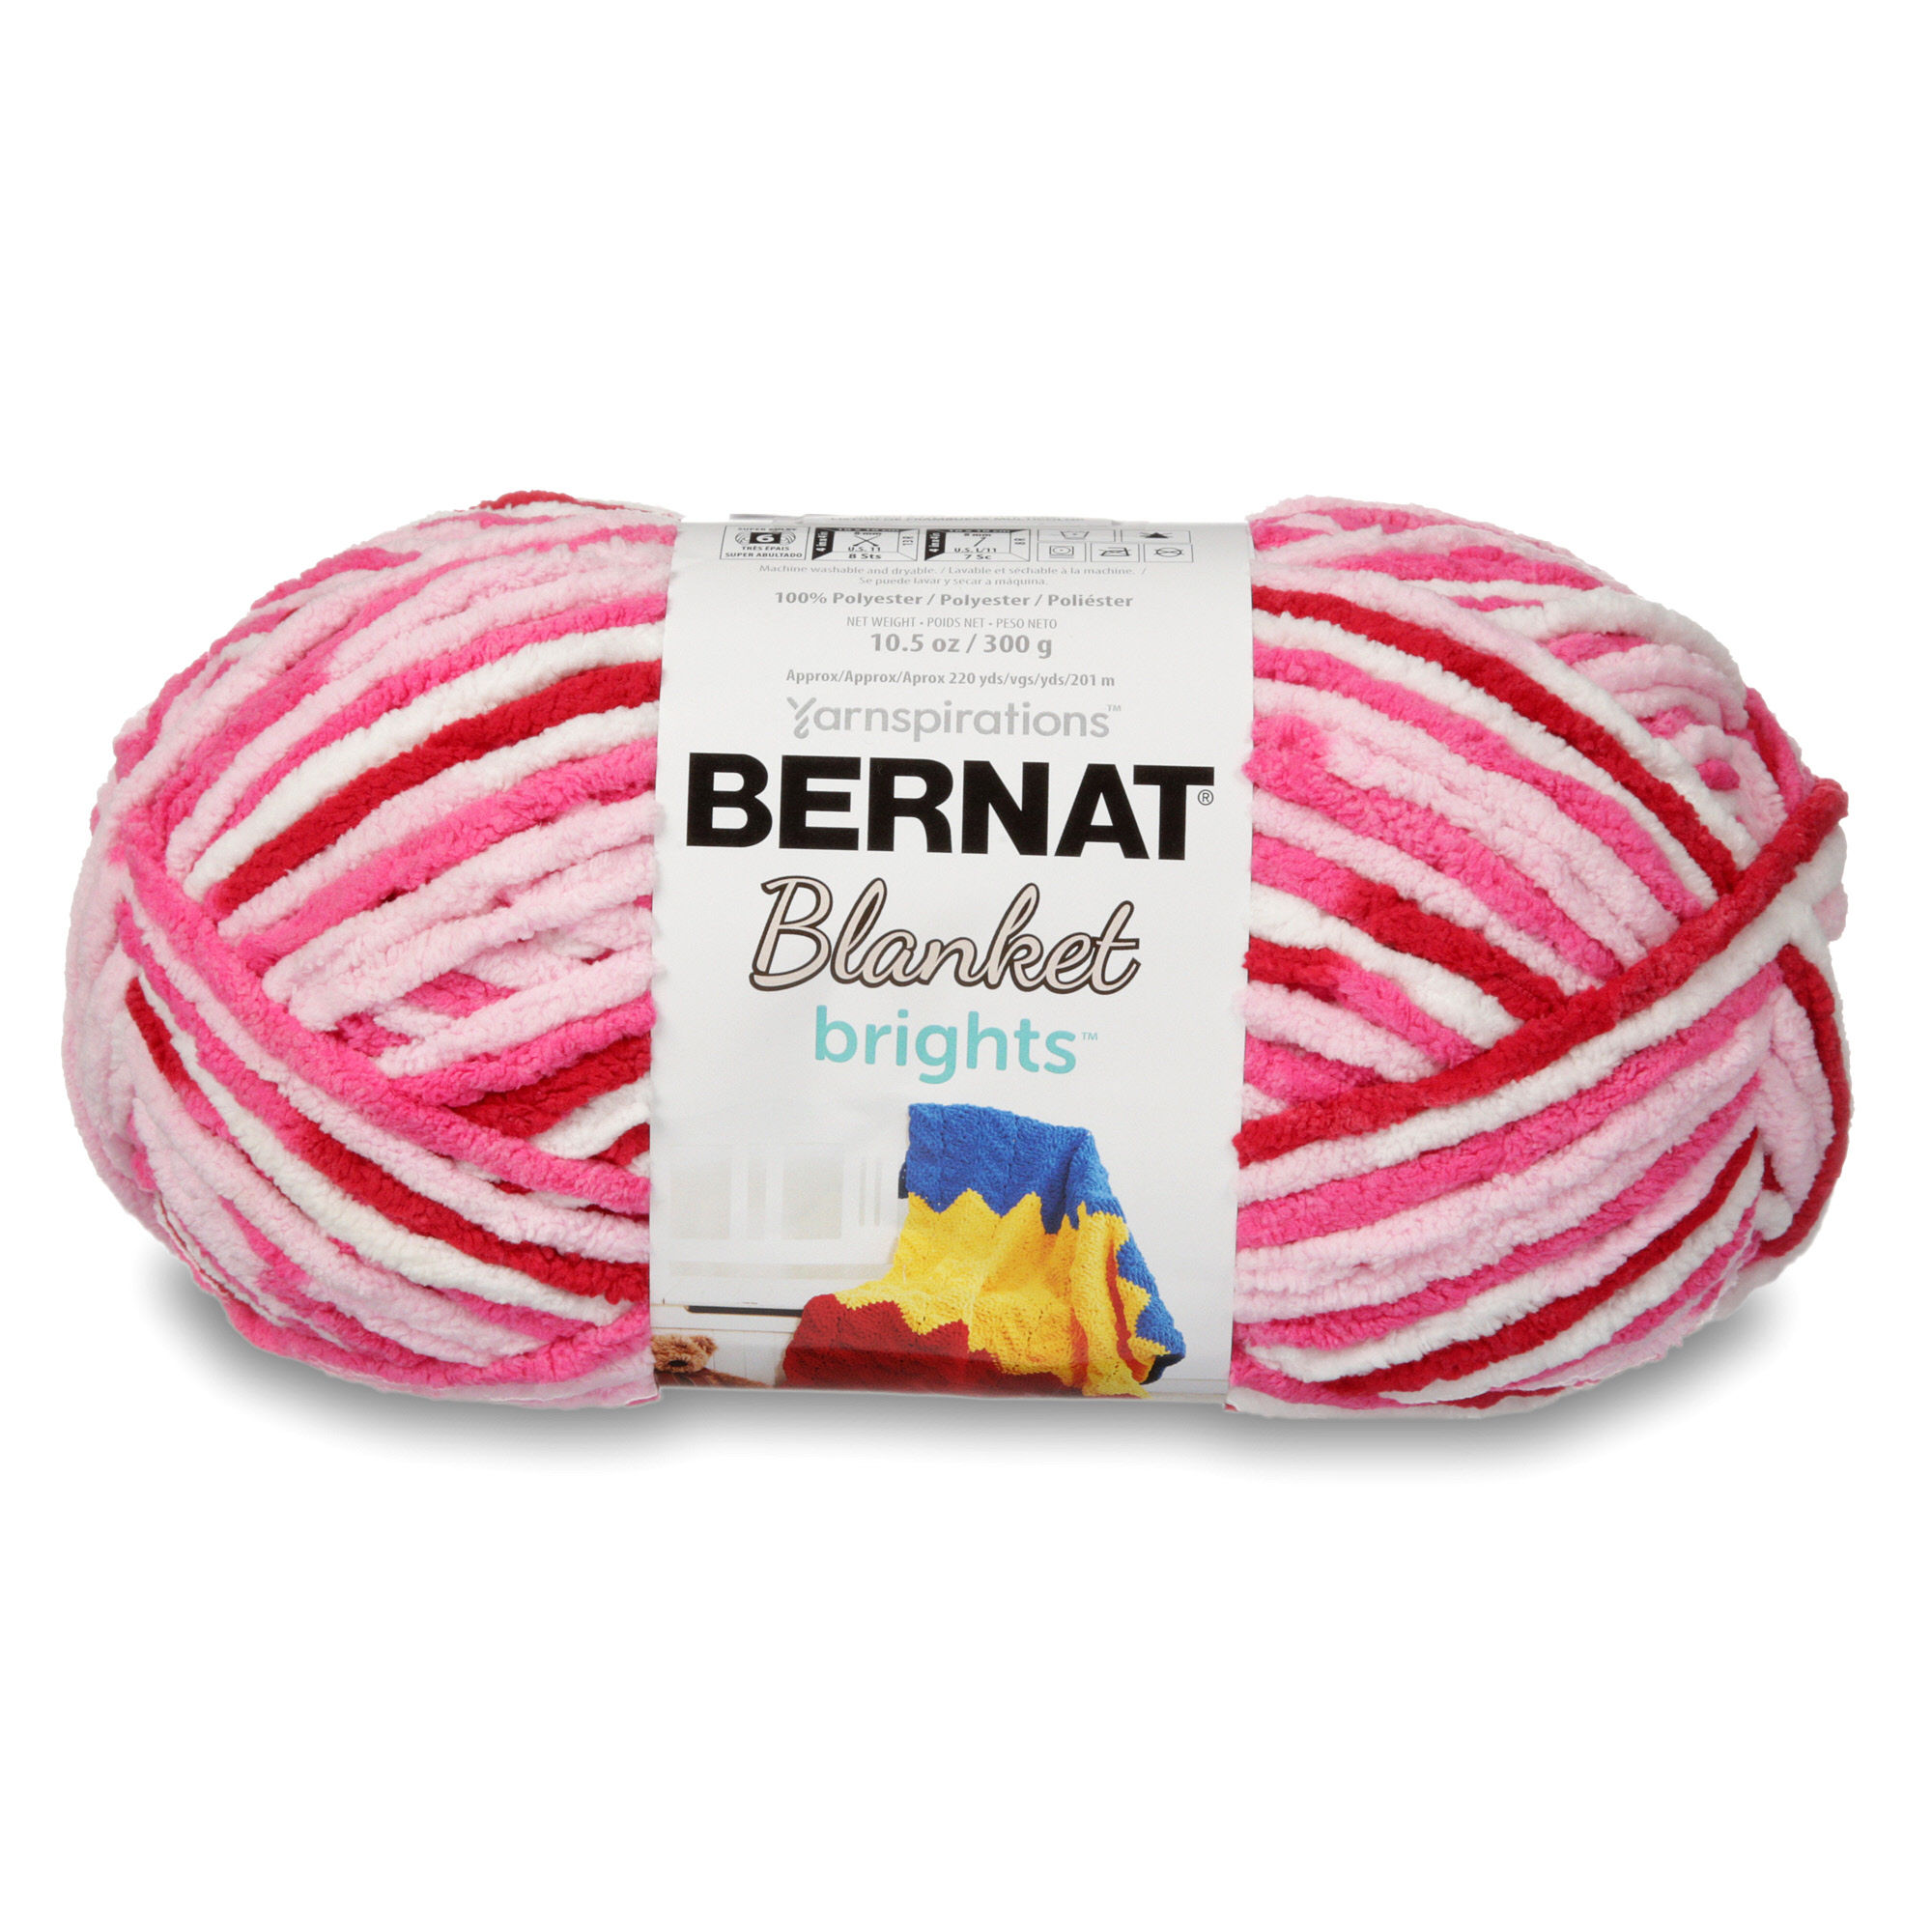 Bernat Blanket Brights 300g Ball